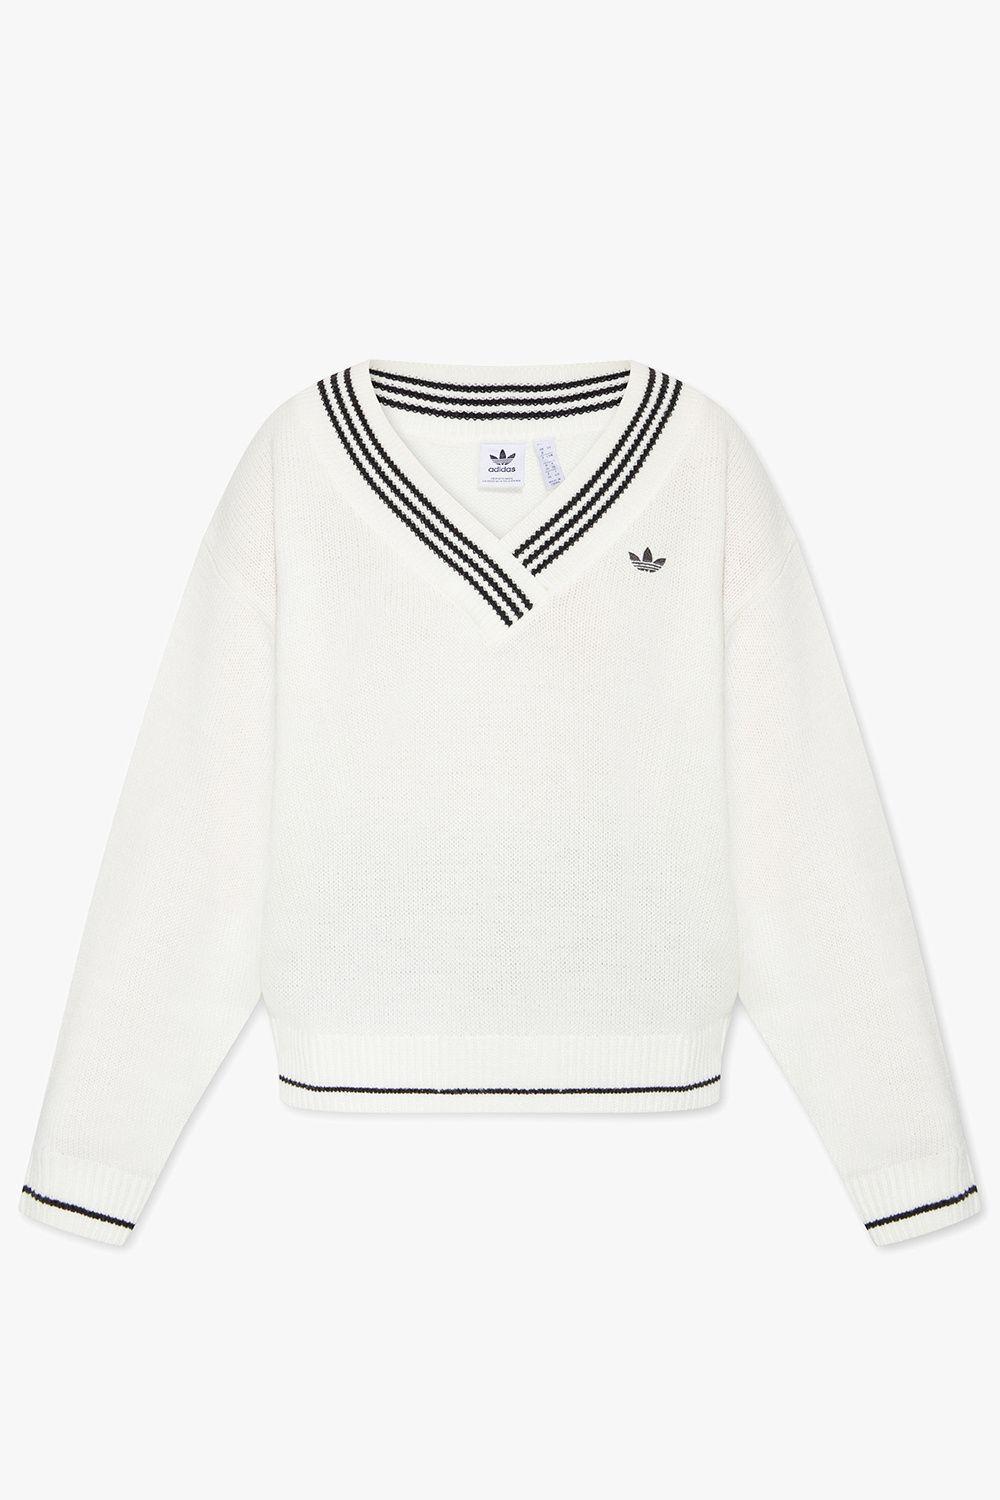 adidas Originals Sweater in White | Lyst